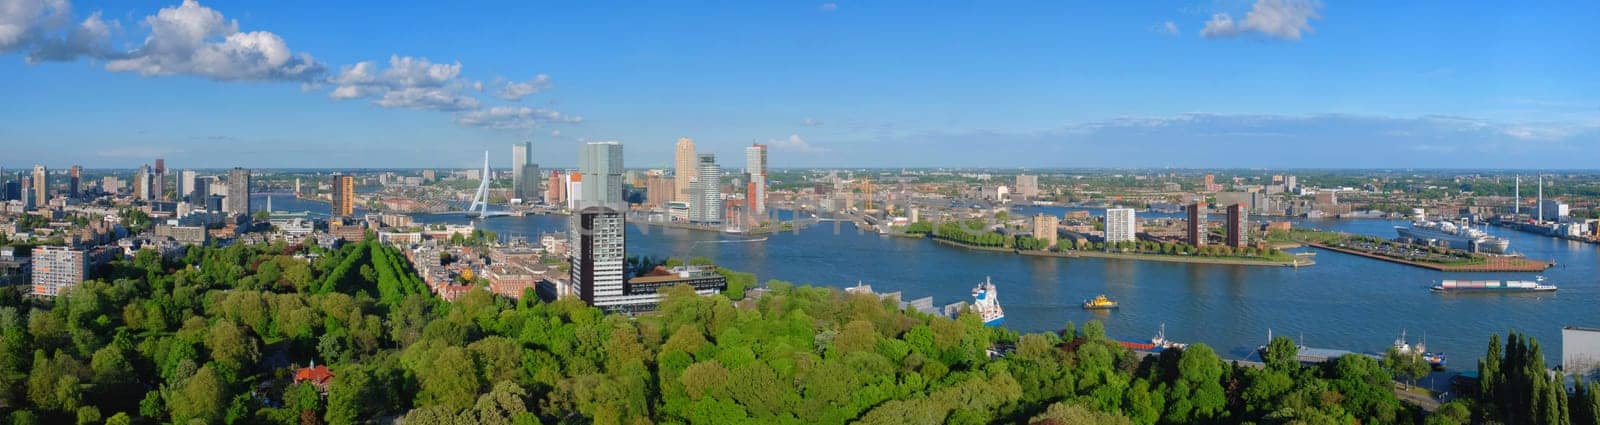 Aerial panorama of Rotterdam city and the Erasmus bridge by dimol